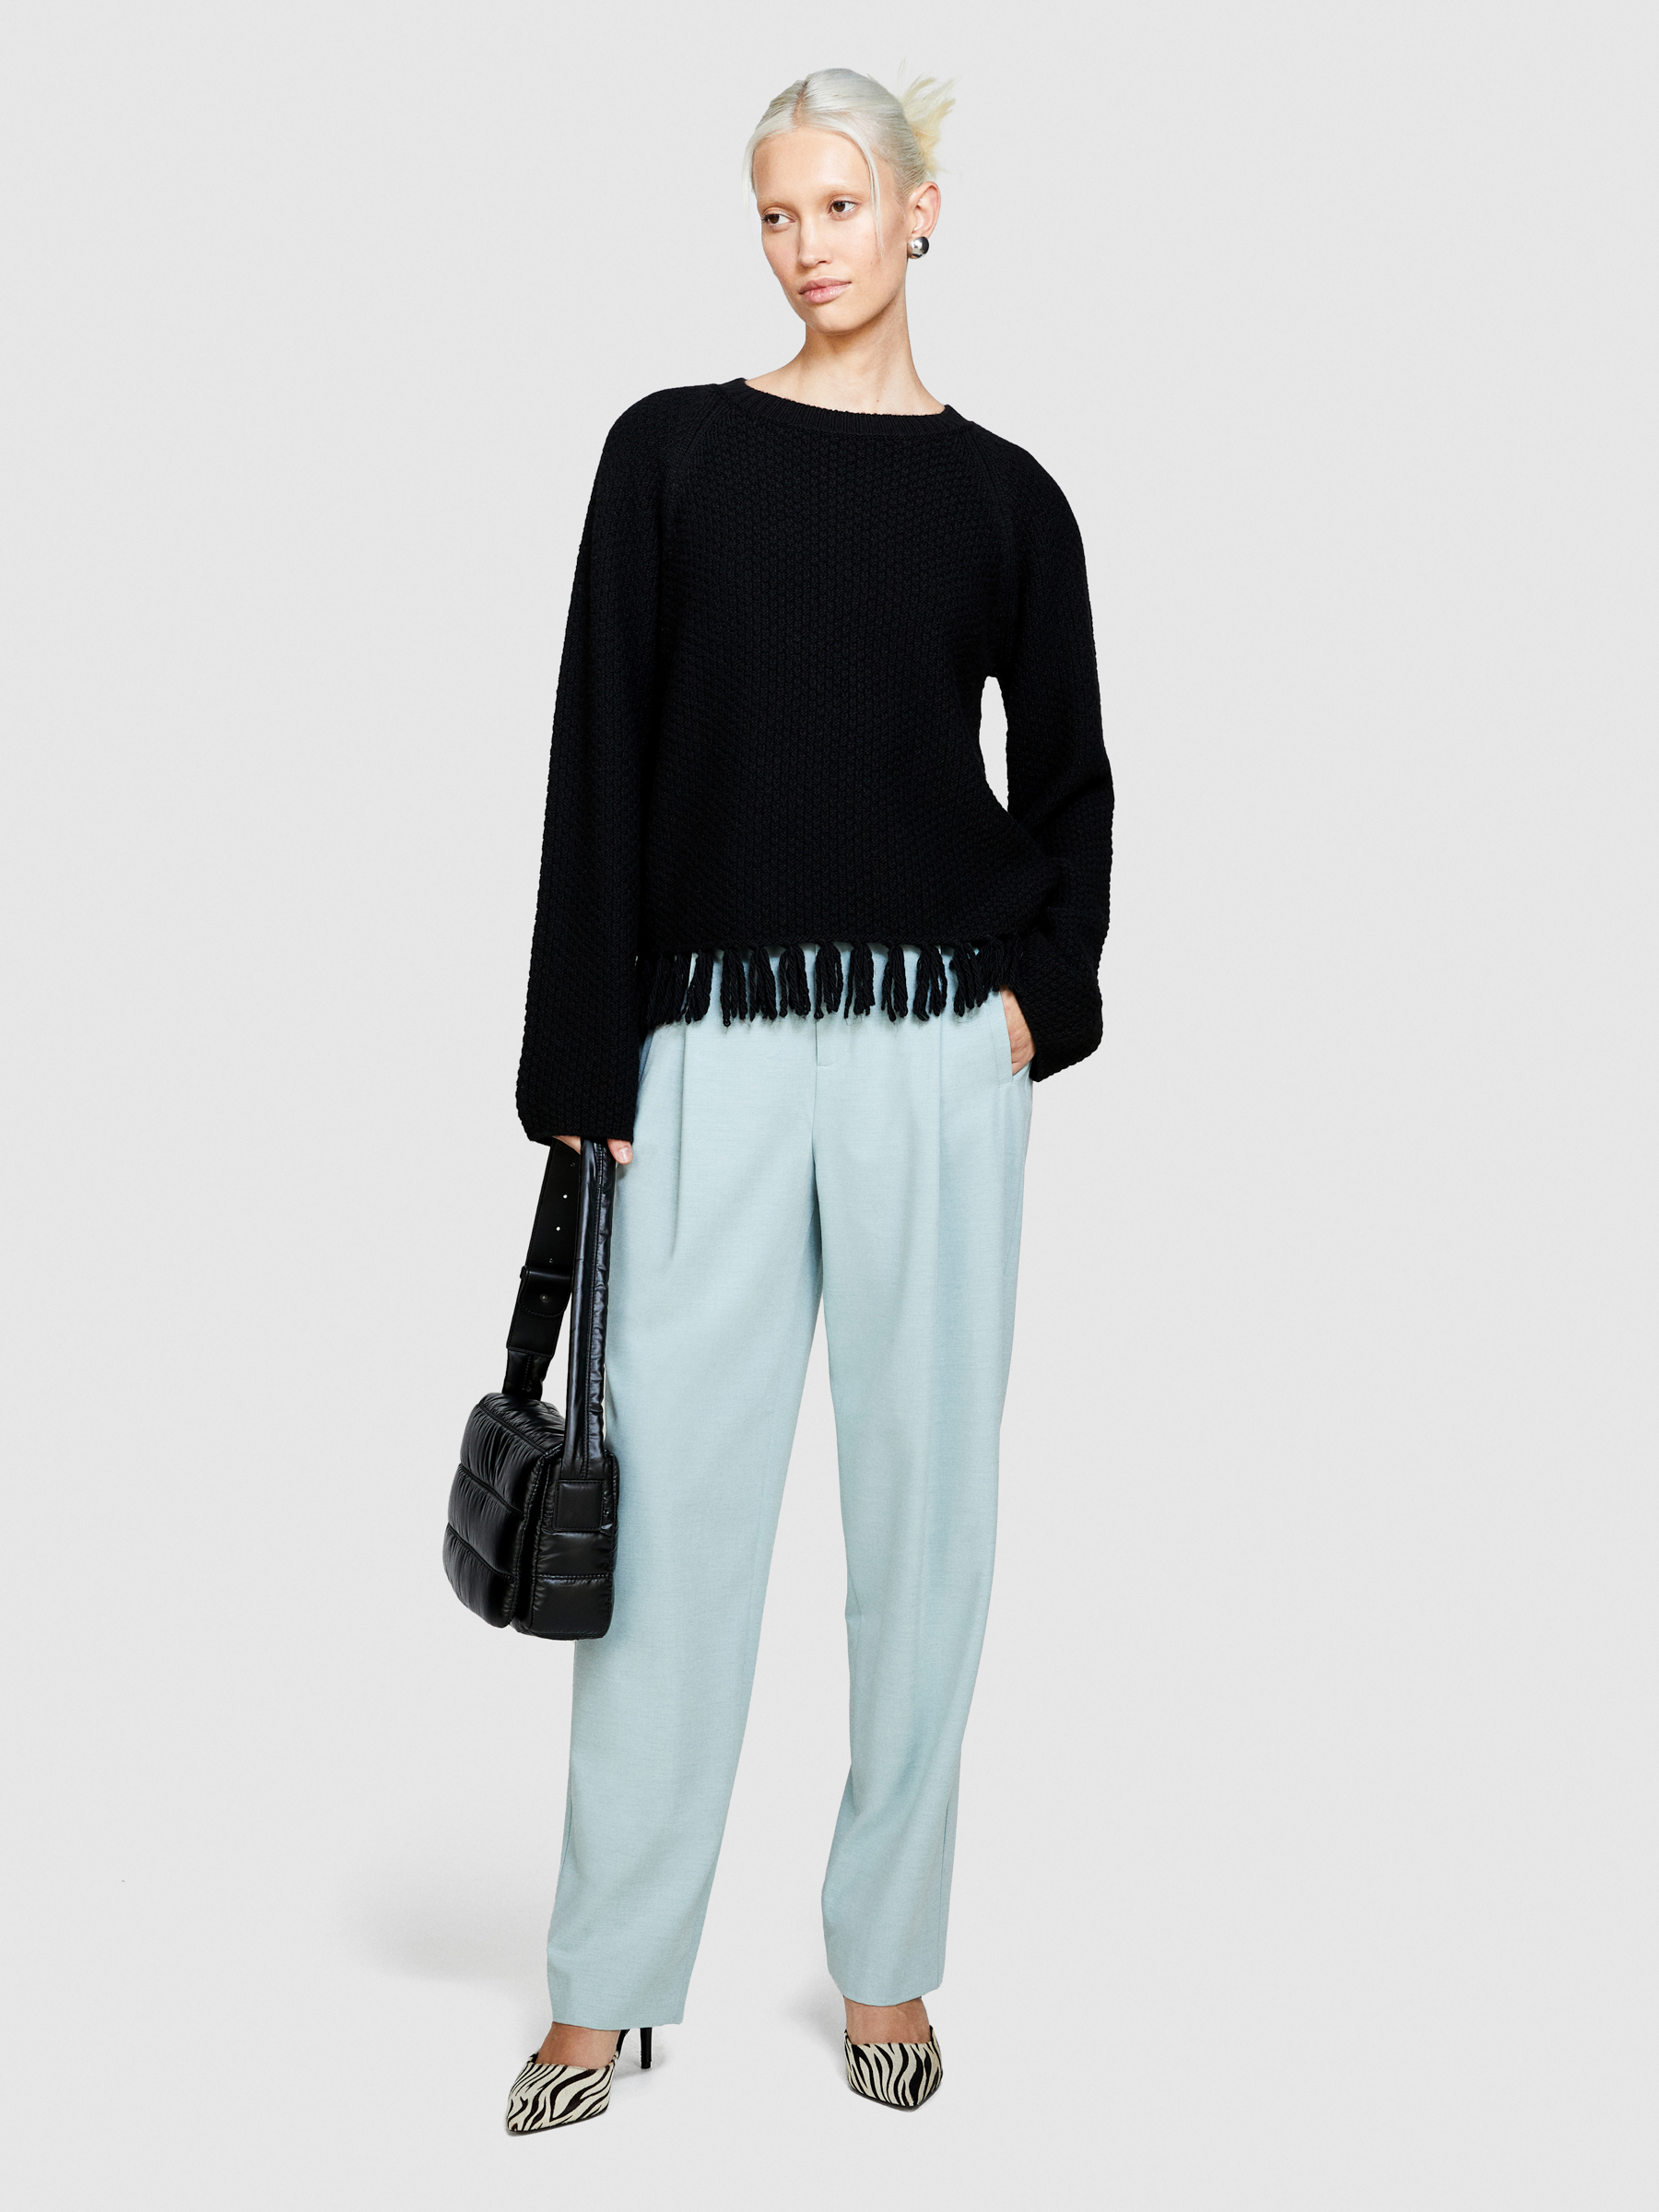 Sisley - Sweater With Fringe, Woman, Black, Size: L